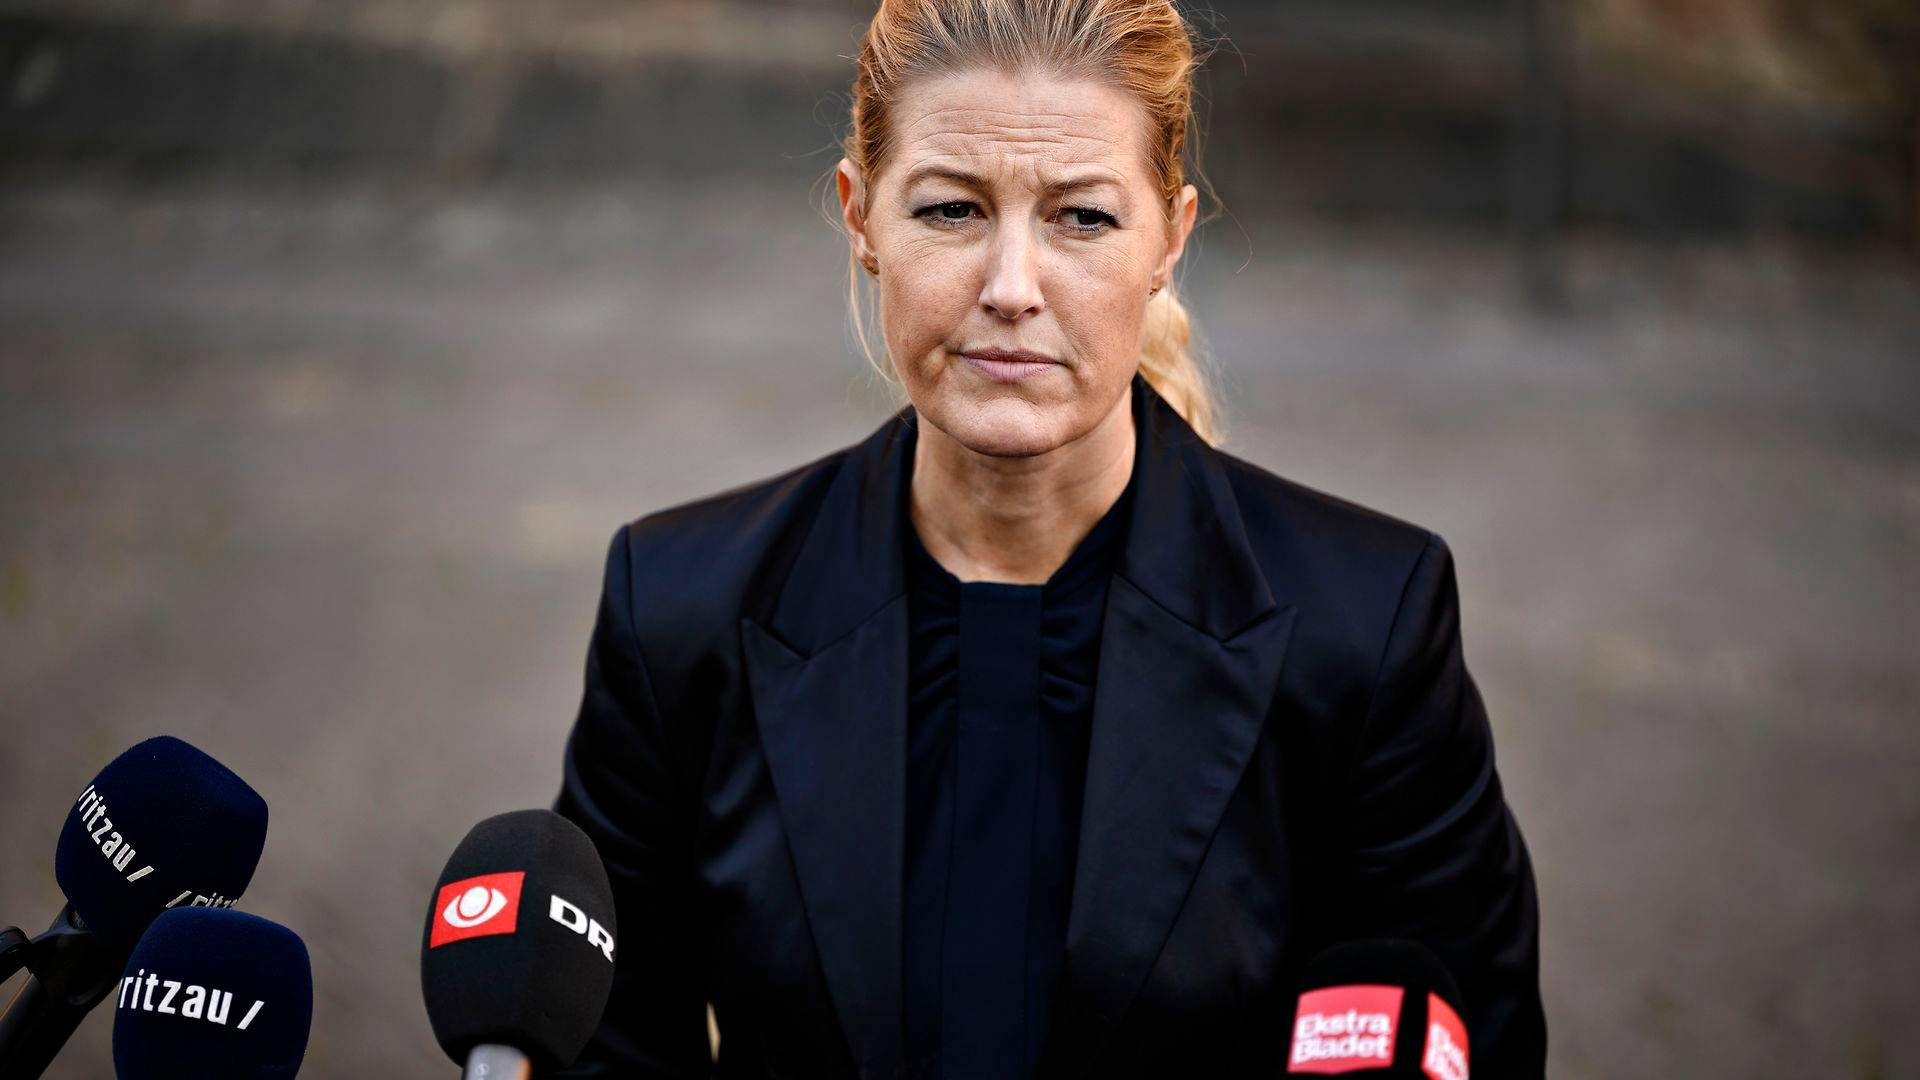 Der er opbakning til Sofie Carsten Nielsen som ny politisk leder for De Radikale fra hendes bagland. | Foto: Philip Davali/Ritzau Scanpix